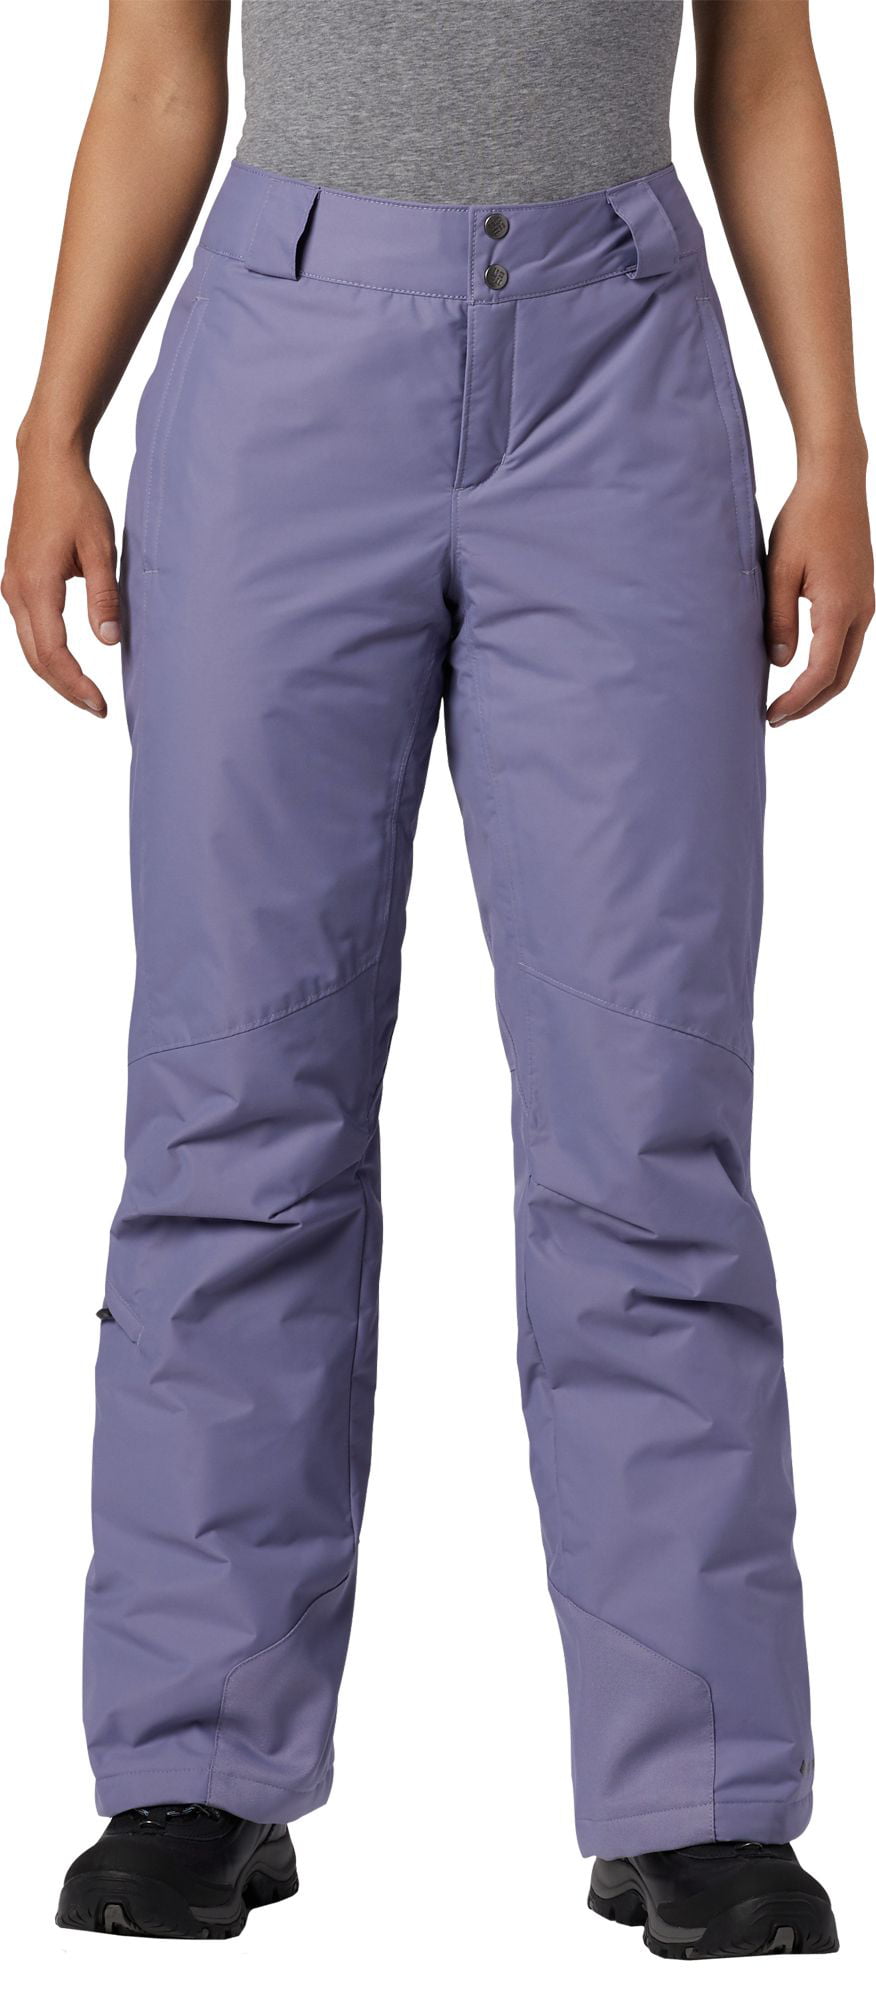 Columbia Mens Slope Style Omni-Heat Ski Pants Waterproof Insulated